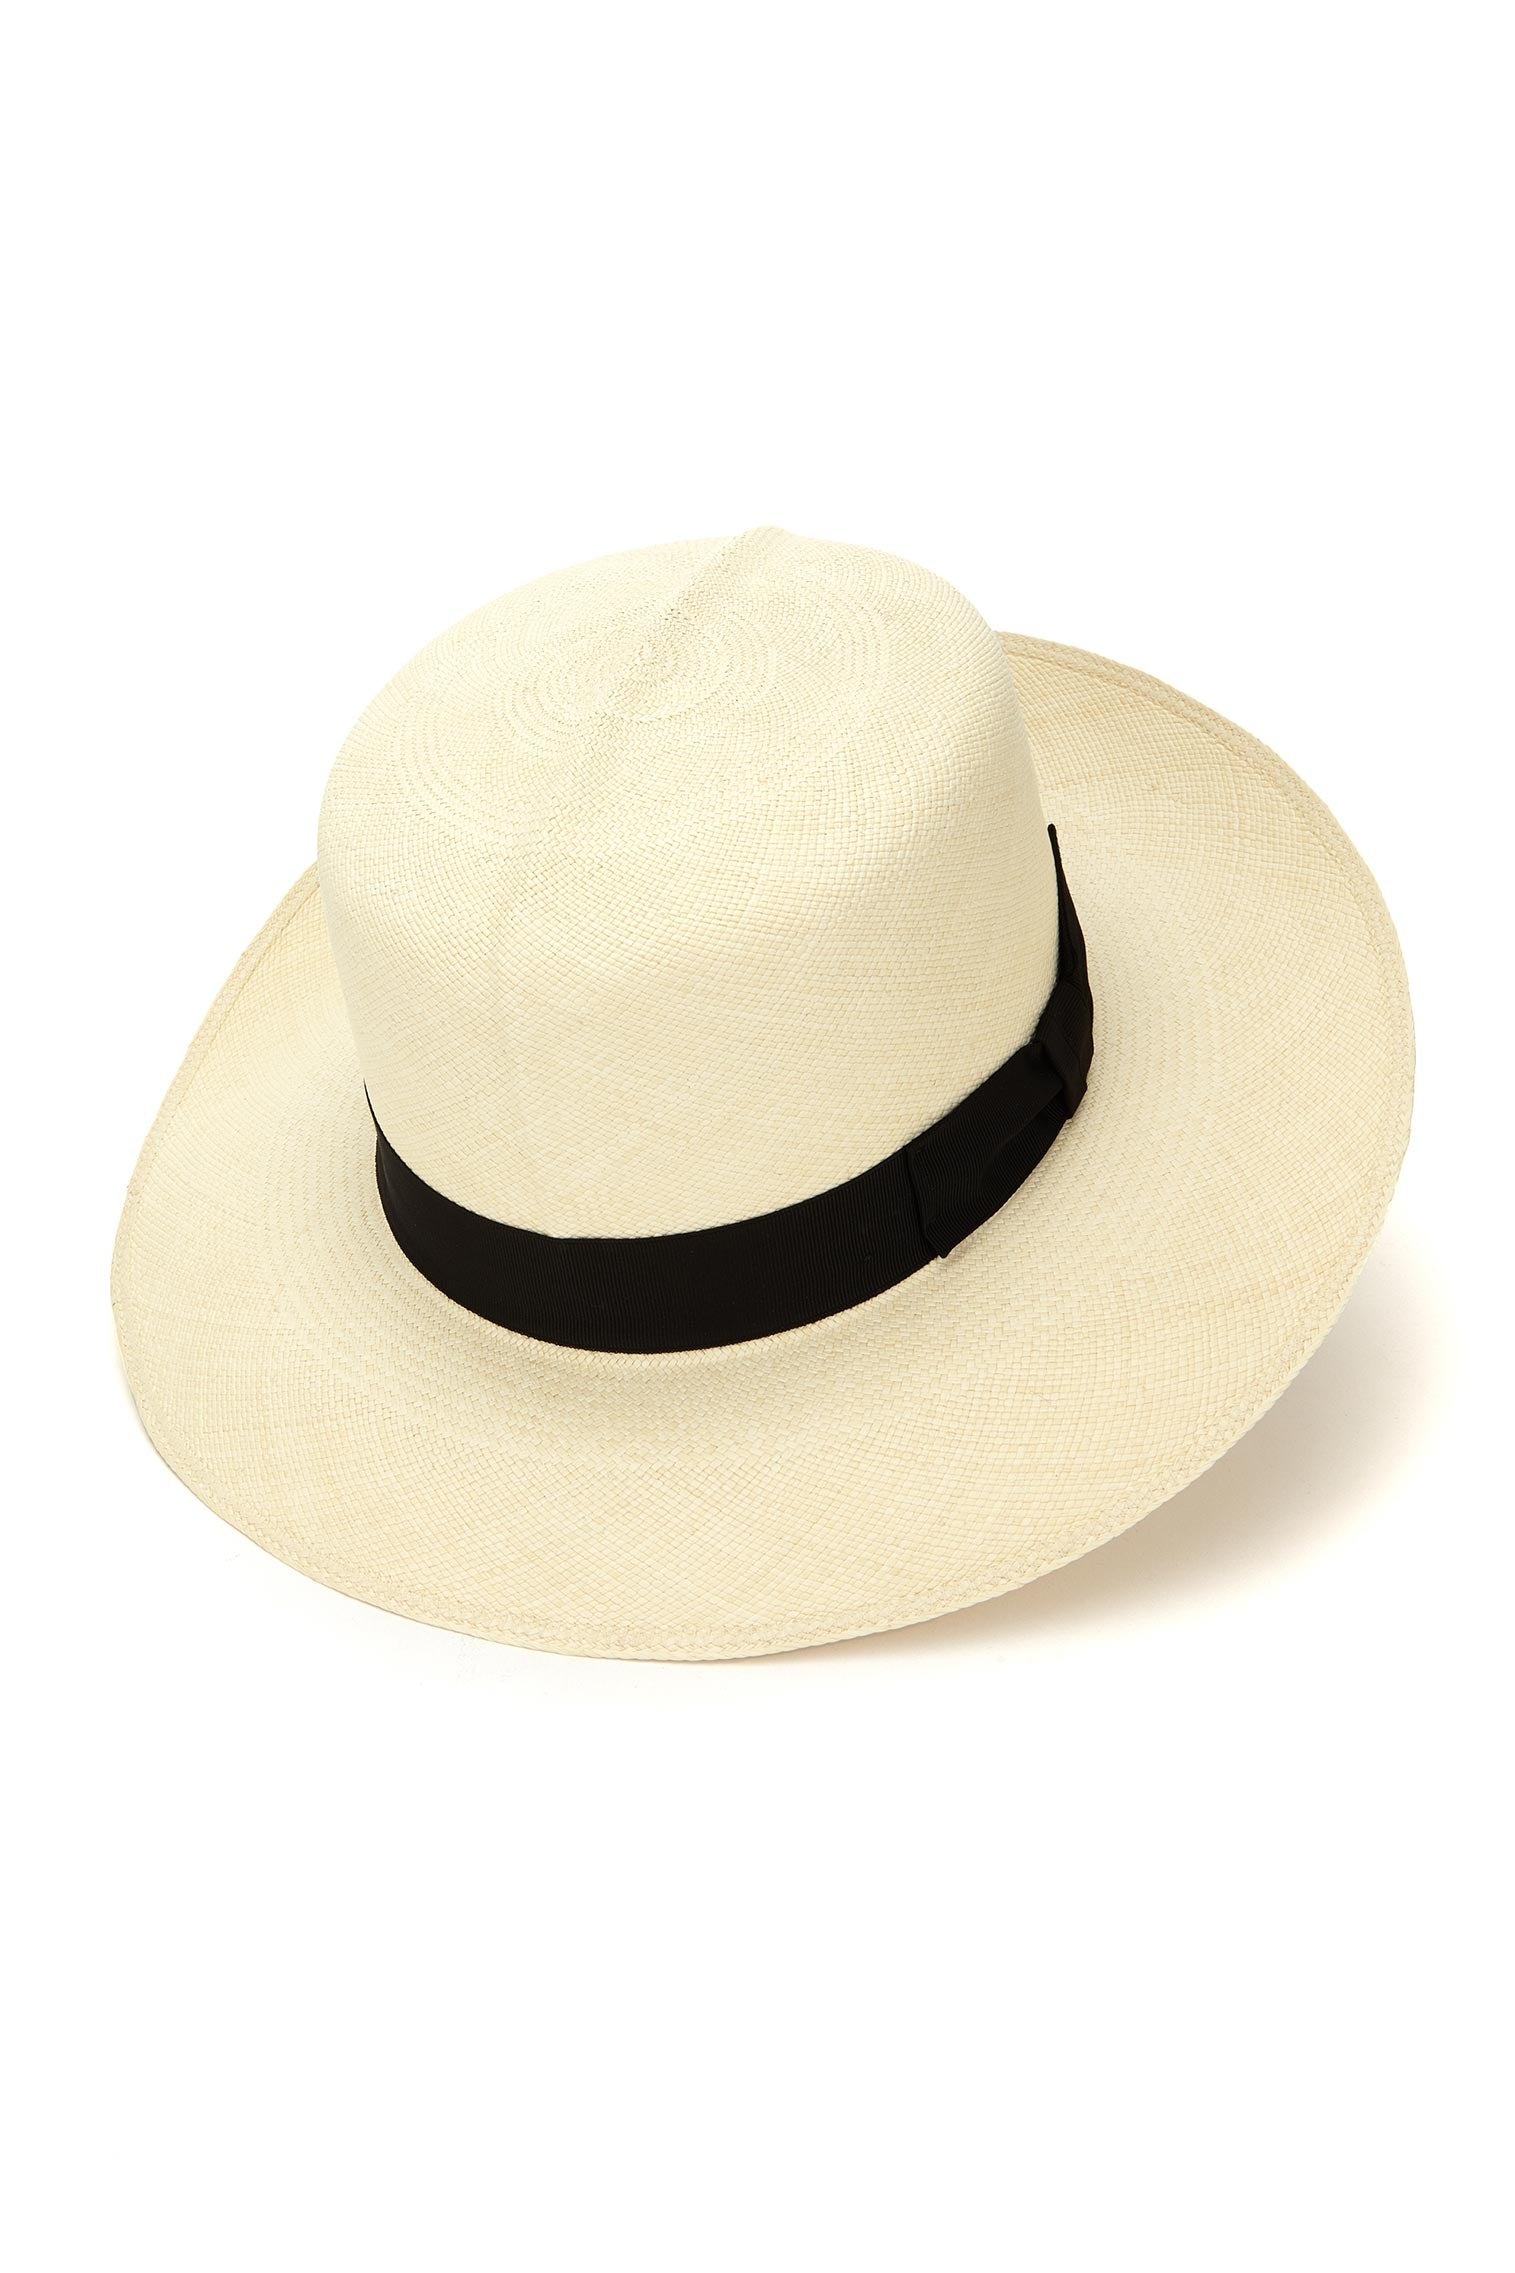 Rollable Superfino Montecristi Panama - Panamas and Sun Hats for Men - Lock & Co. Hatters London UK